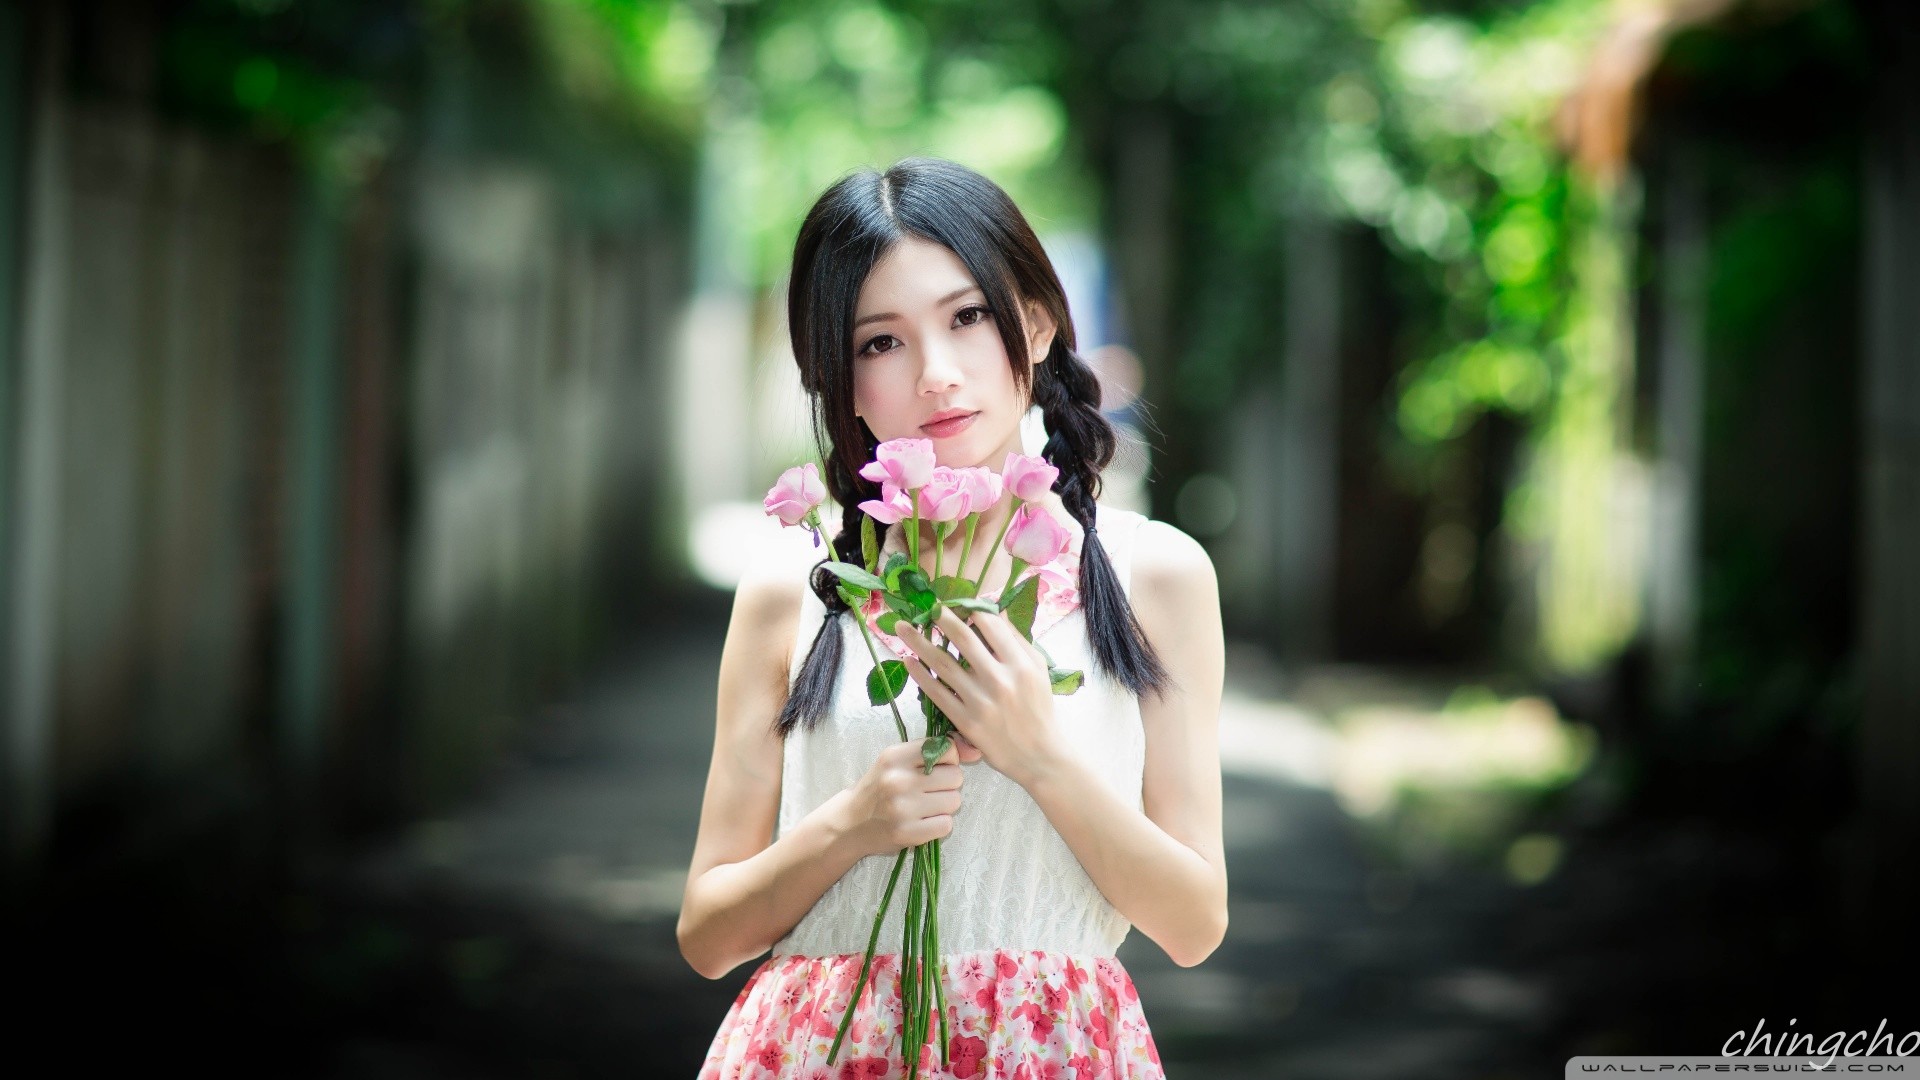 People 1920x1080 women Asian model dark hair flowers plants women outdoors standing pink flowers